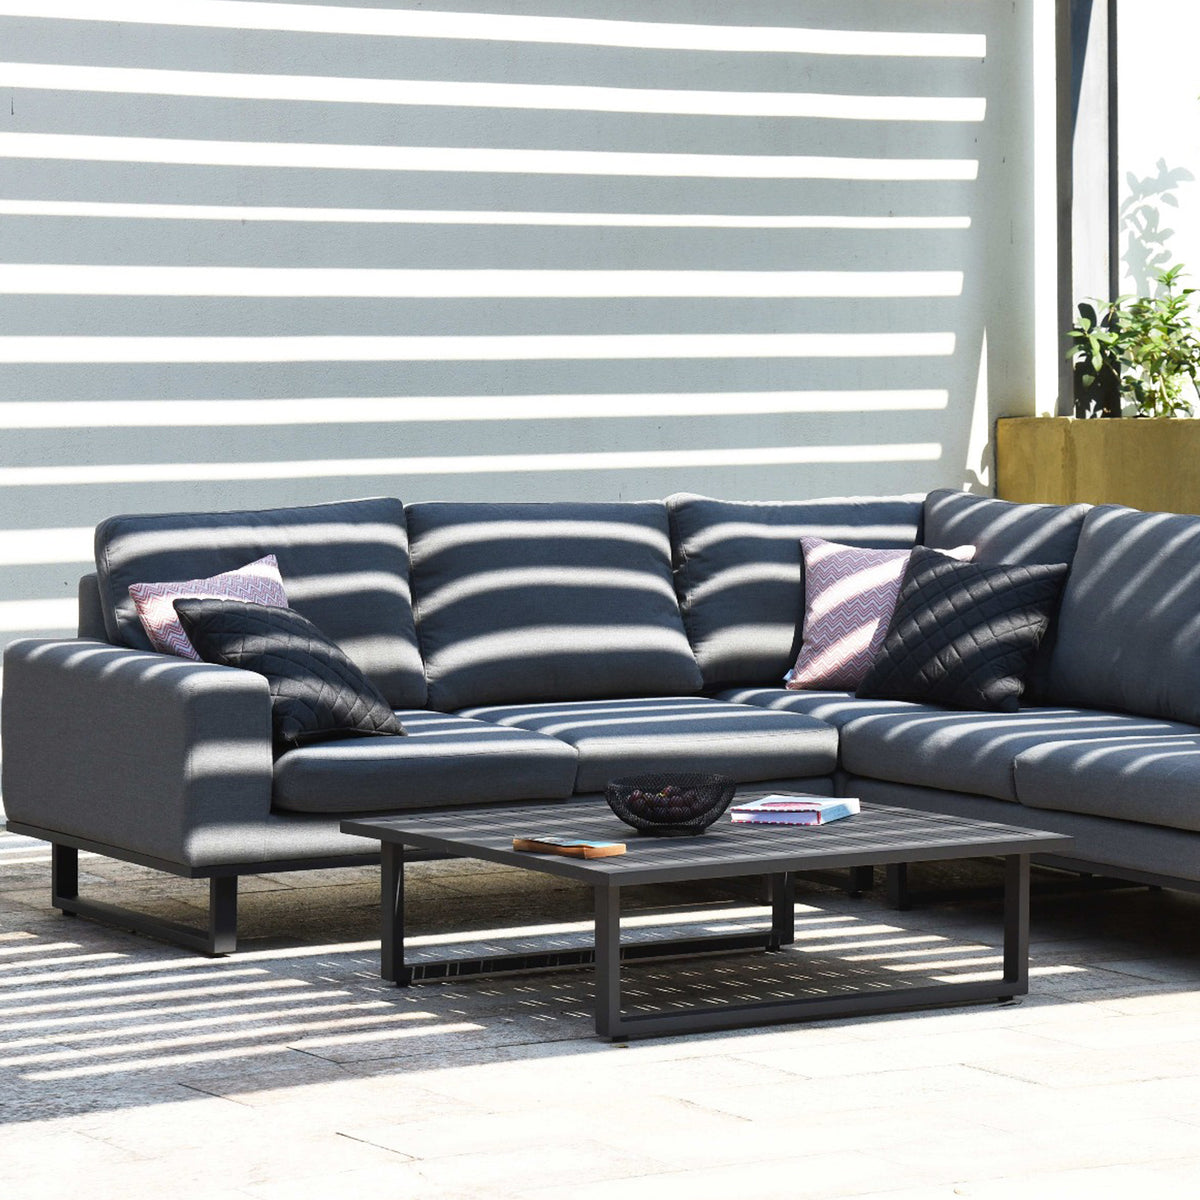 Maze Ethos Flanelle Grey Outdoor Corner Sofa Group